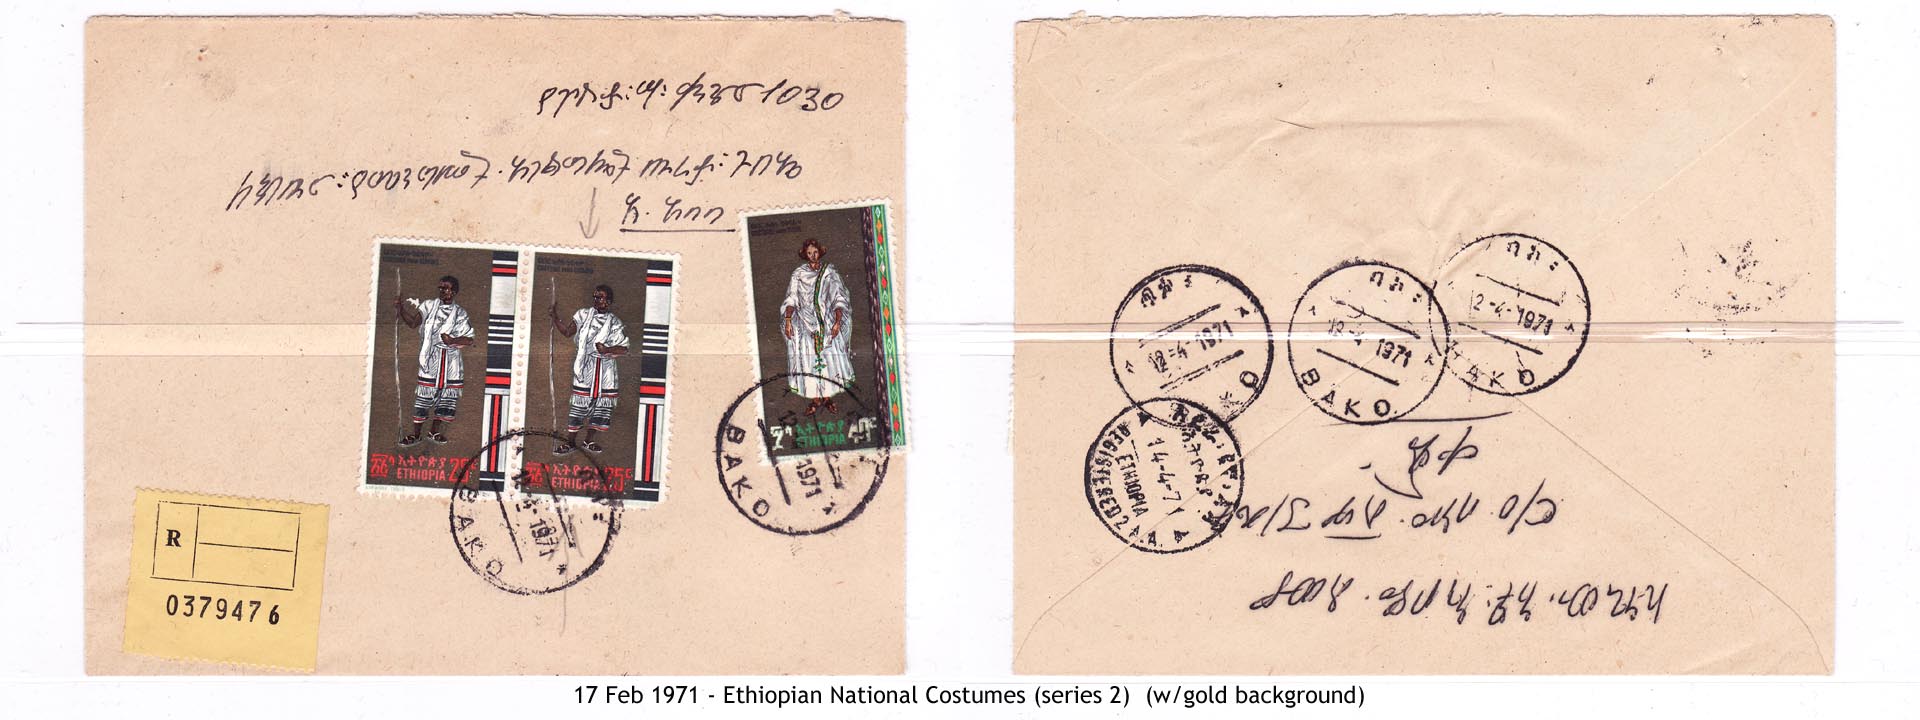 19710217 - Ethiopian National Costumes (series 2)